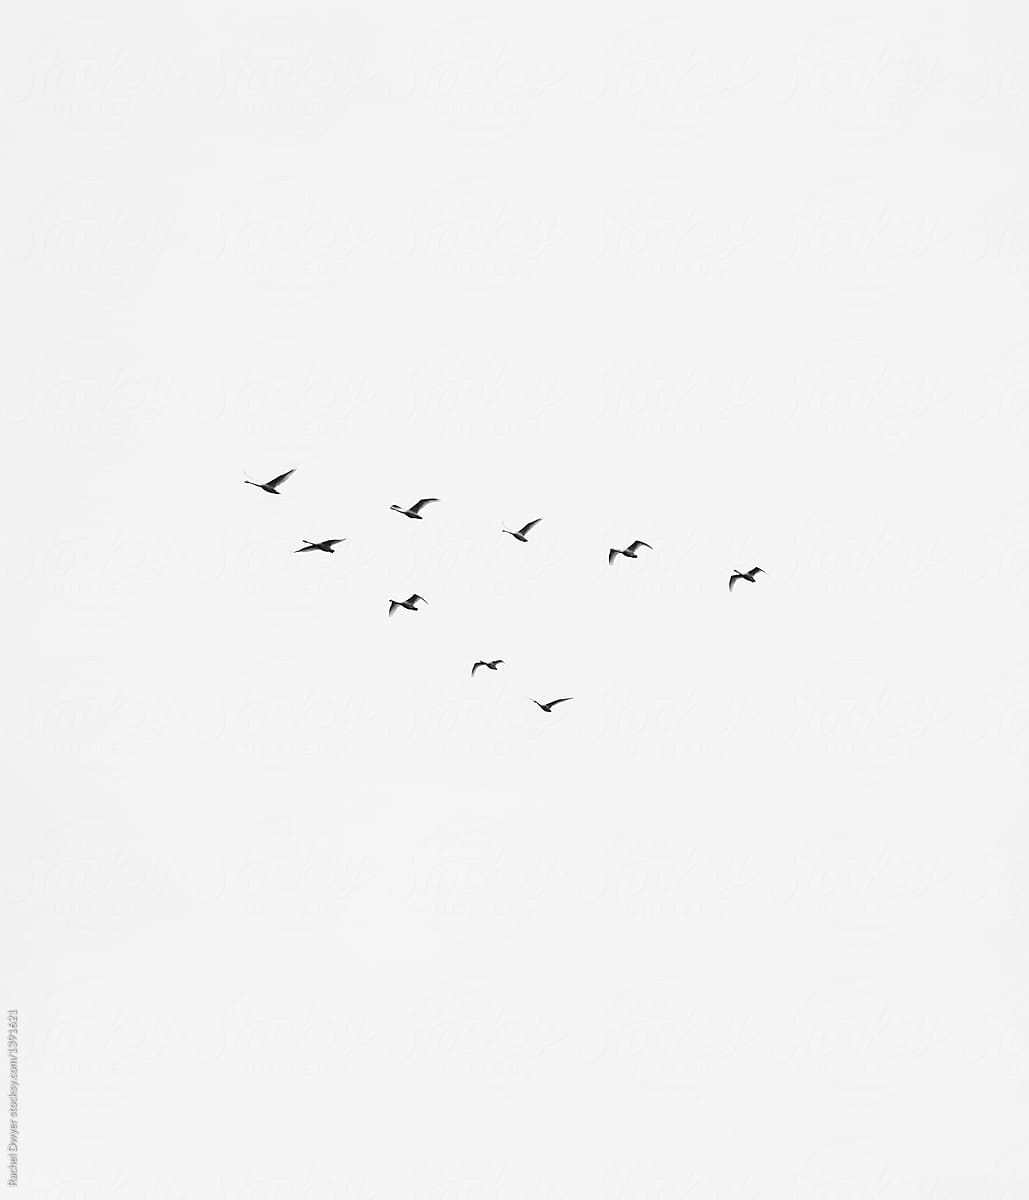 Birds flying above in a V